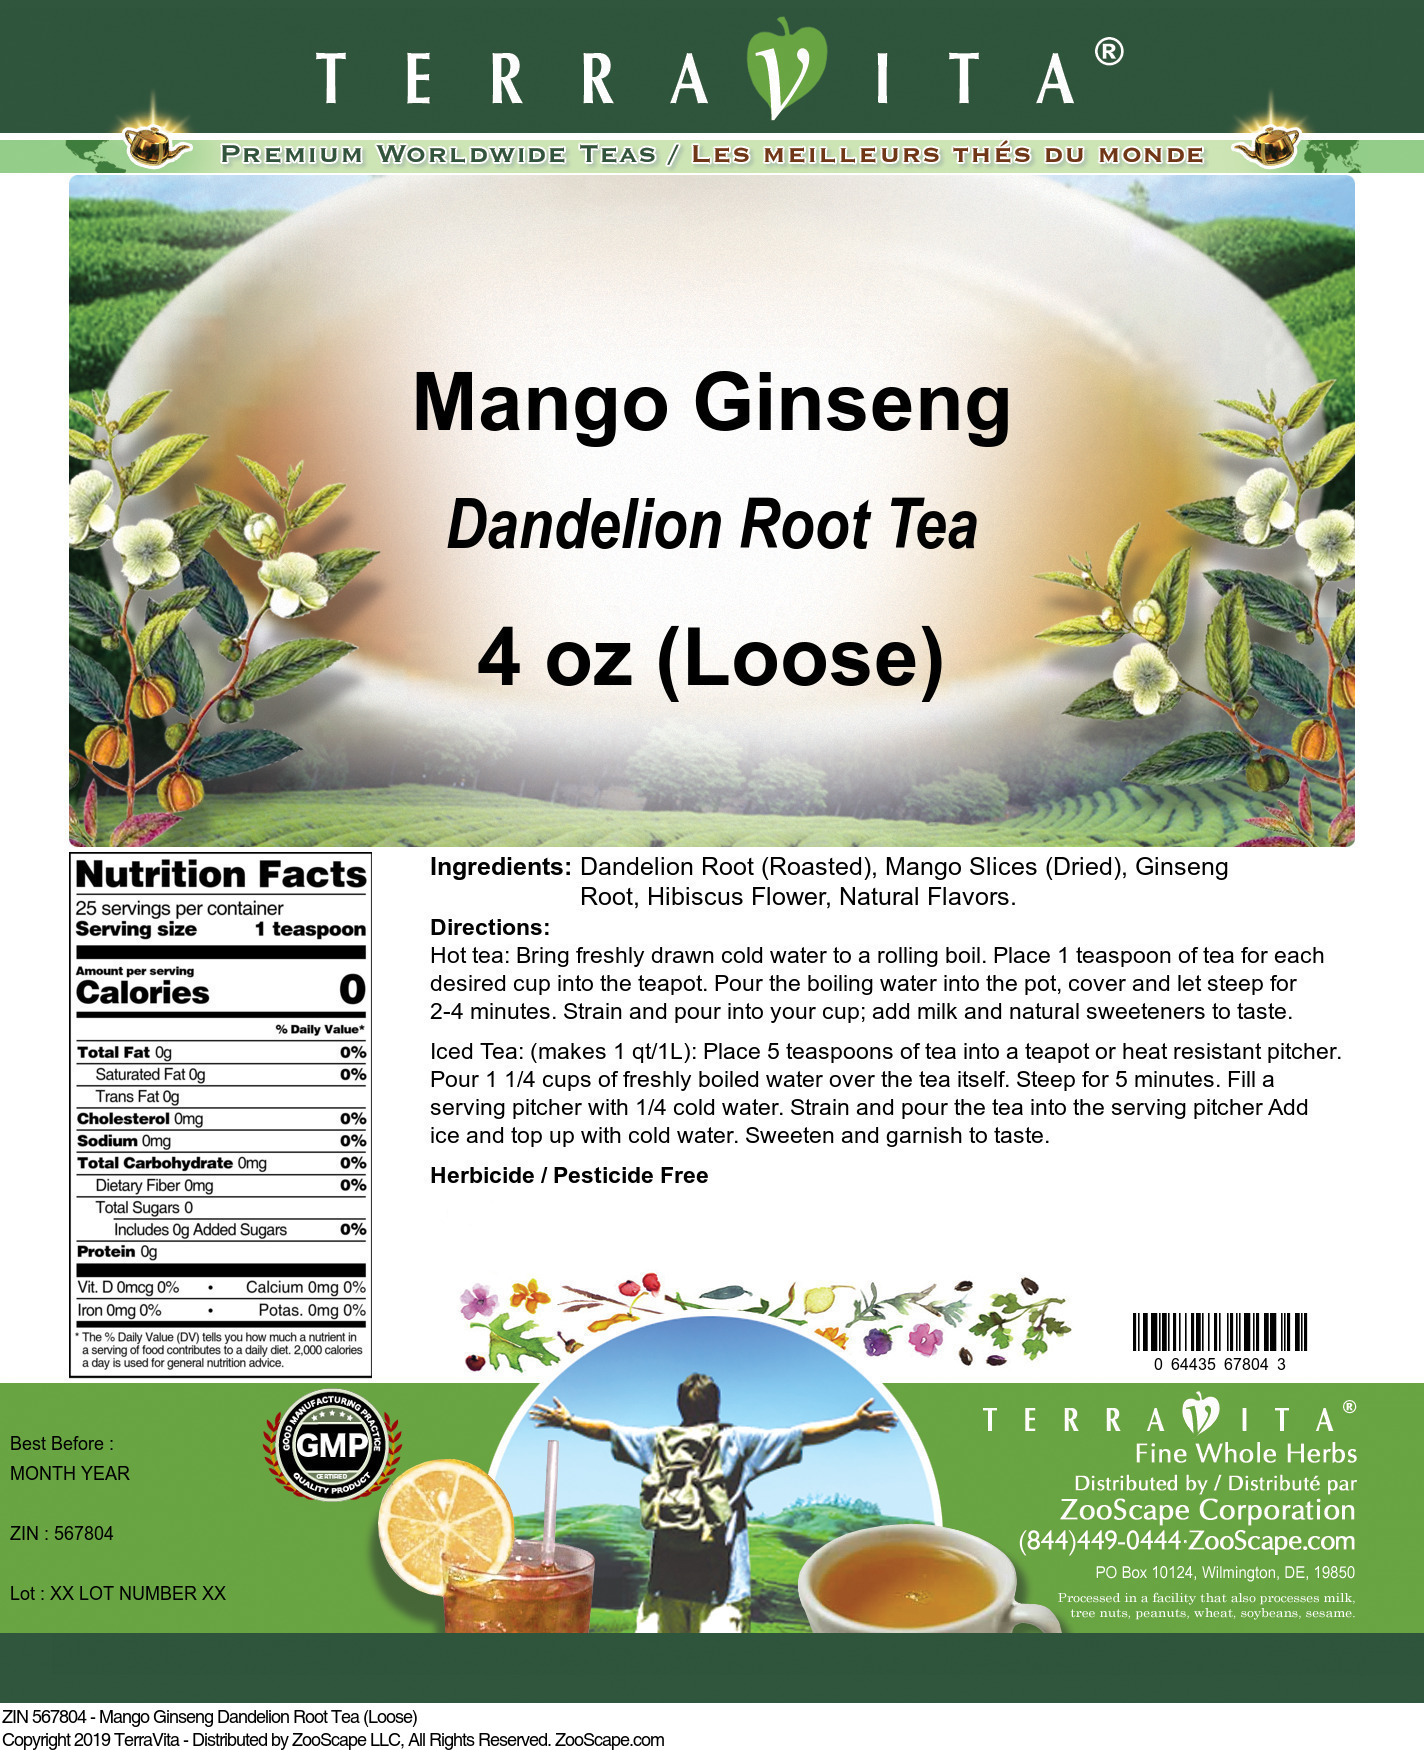 Mango Ginseng Dandelion Root Tea (Loose) - Label